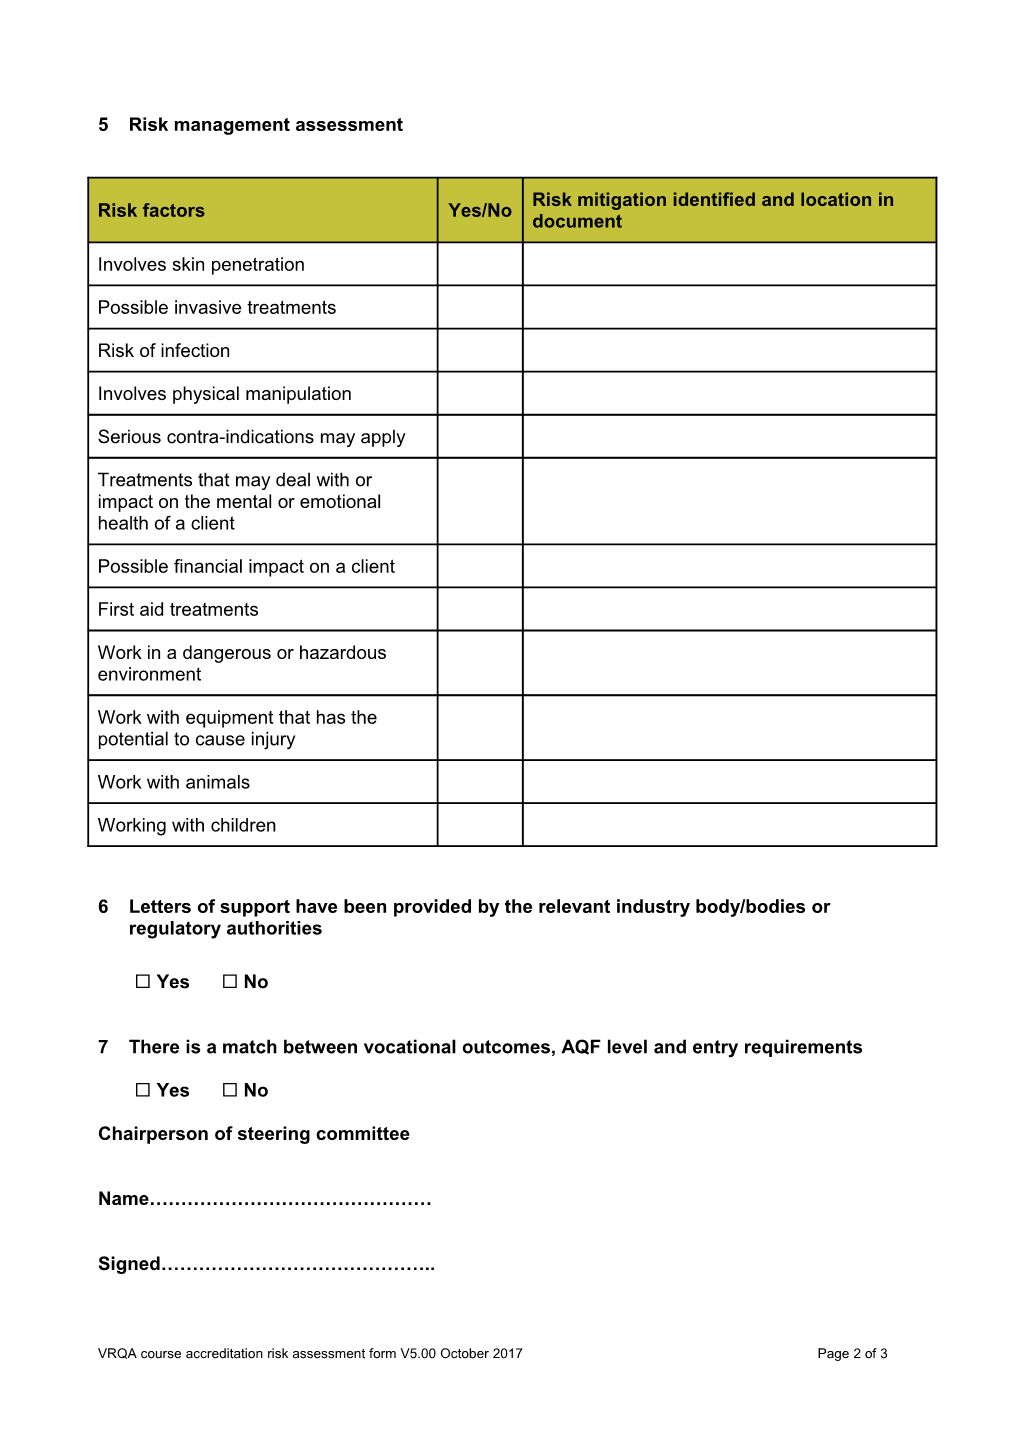 Risk Assessment Form s10